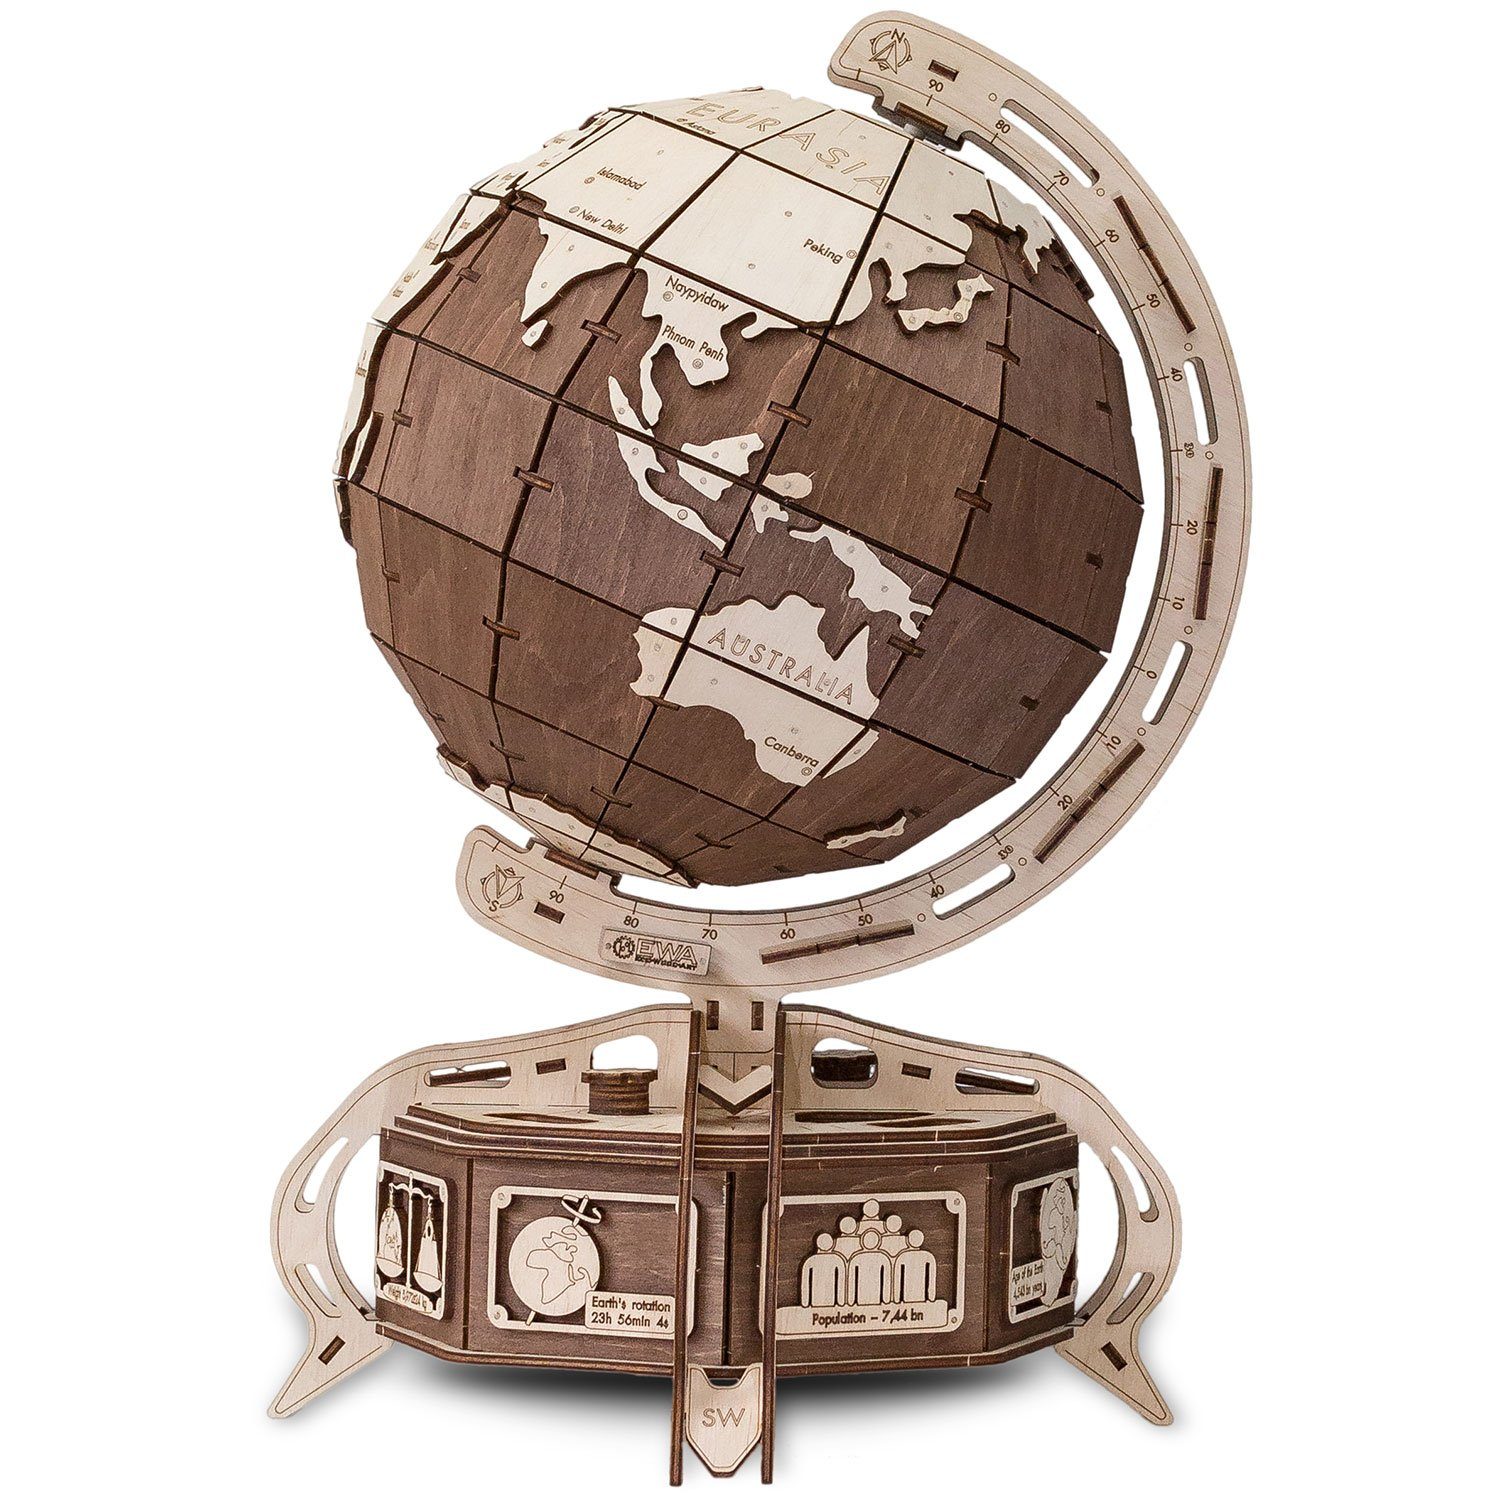 Eco Wood Art 3D-Puzzle Globus - braun – mechanischer Modellbausatz aus Holz, Puzzleteile